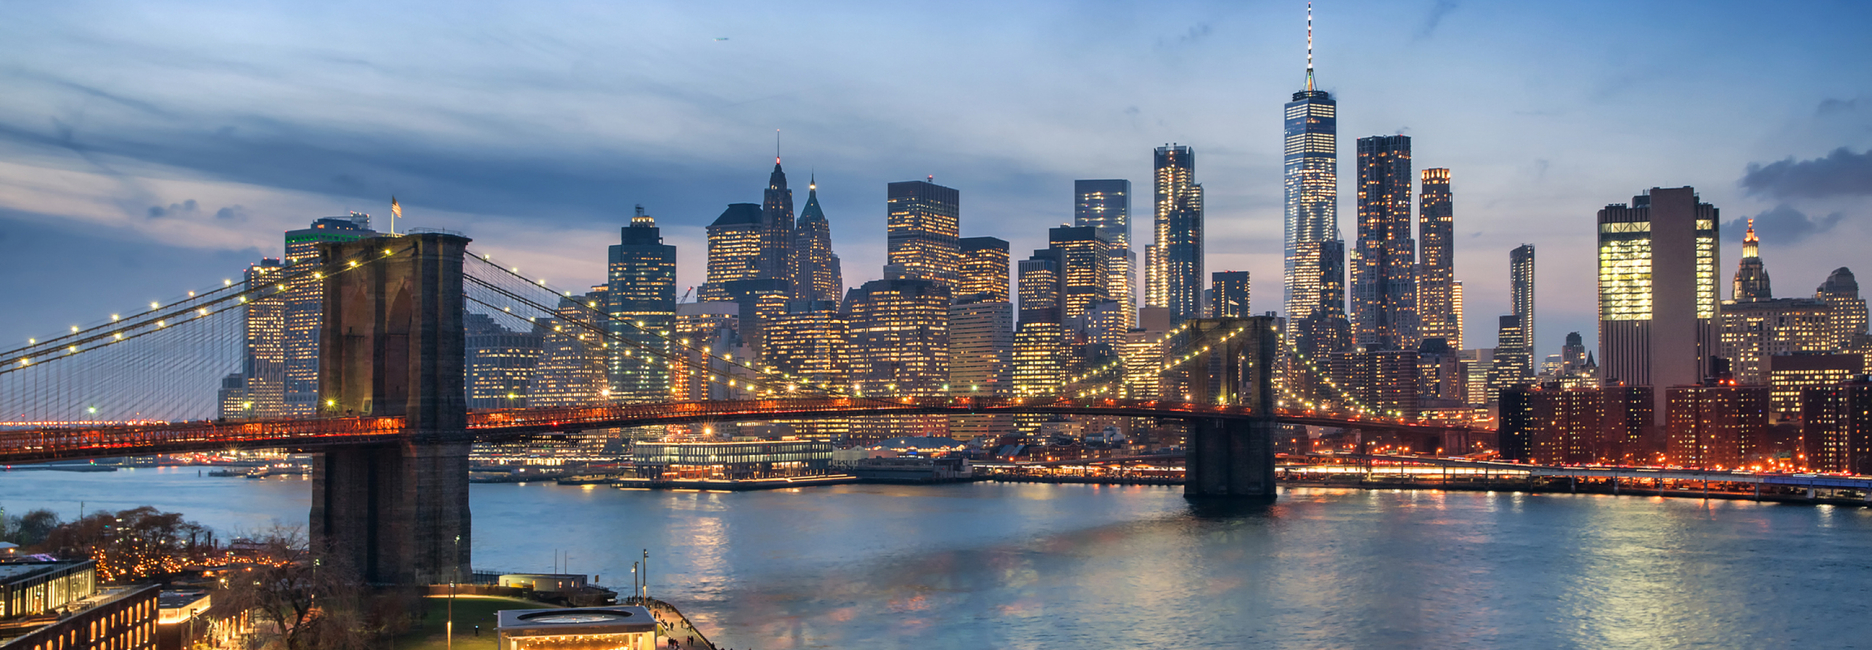 Skyline of lower Manhattan and the Brooklyn Bridge​